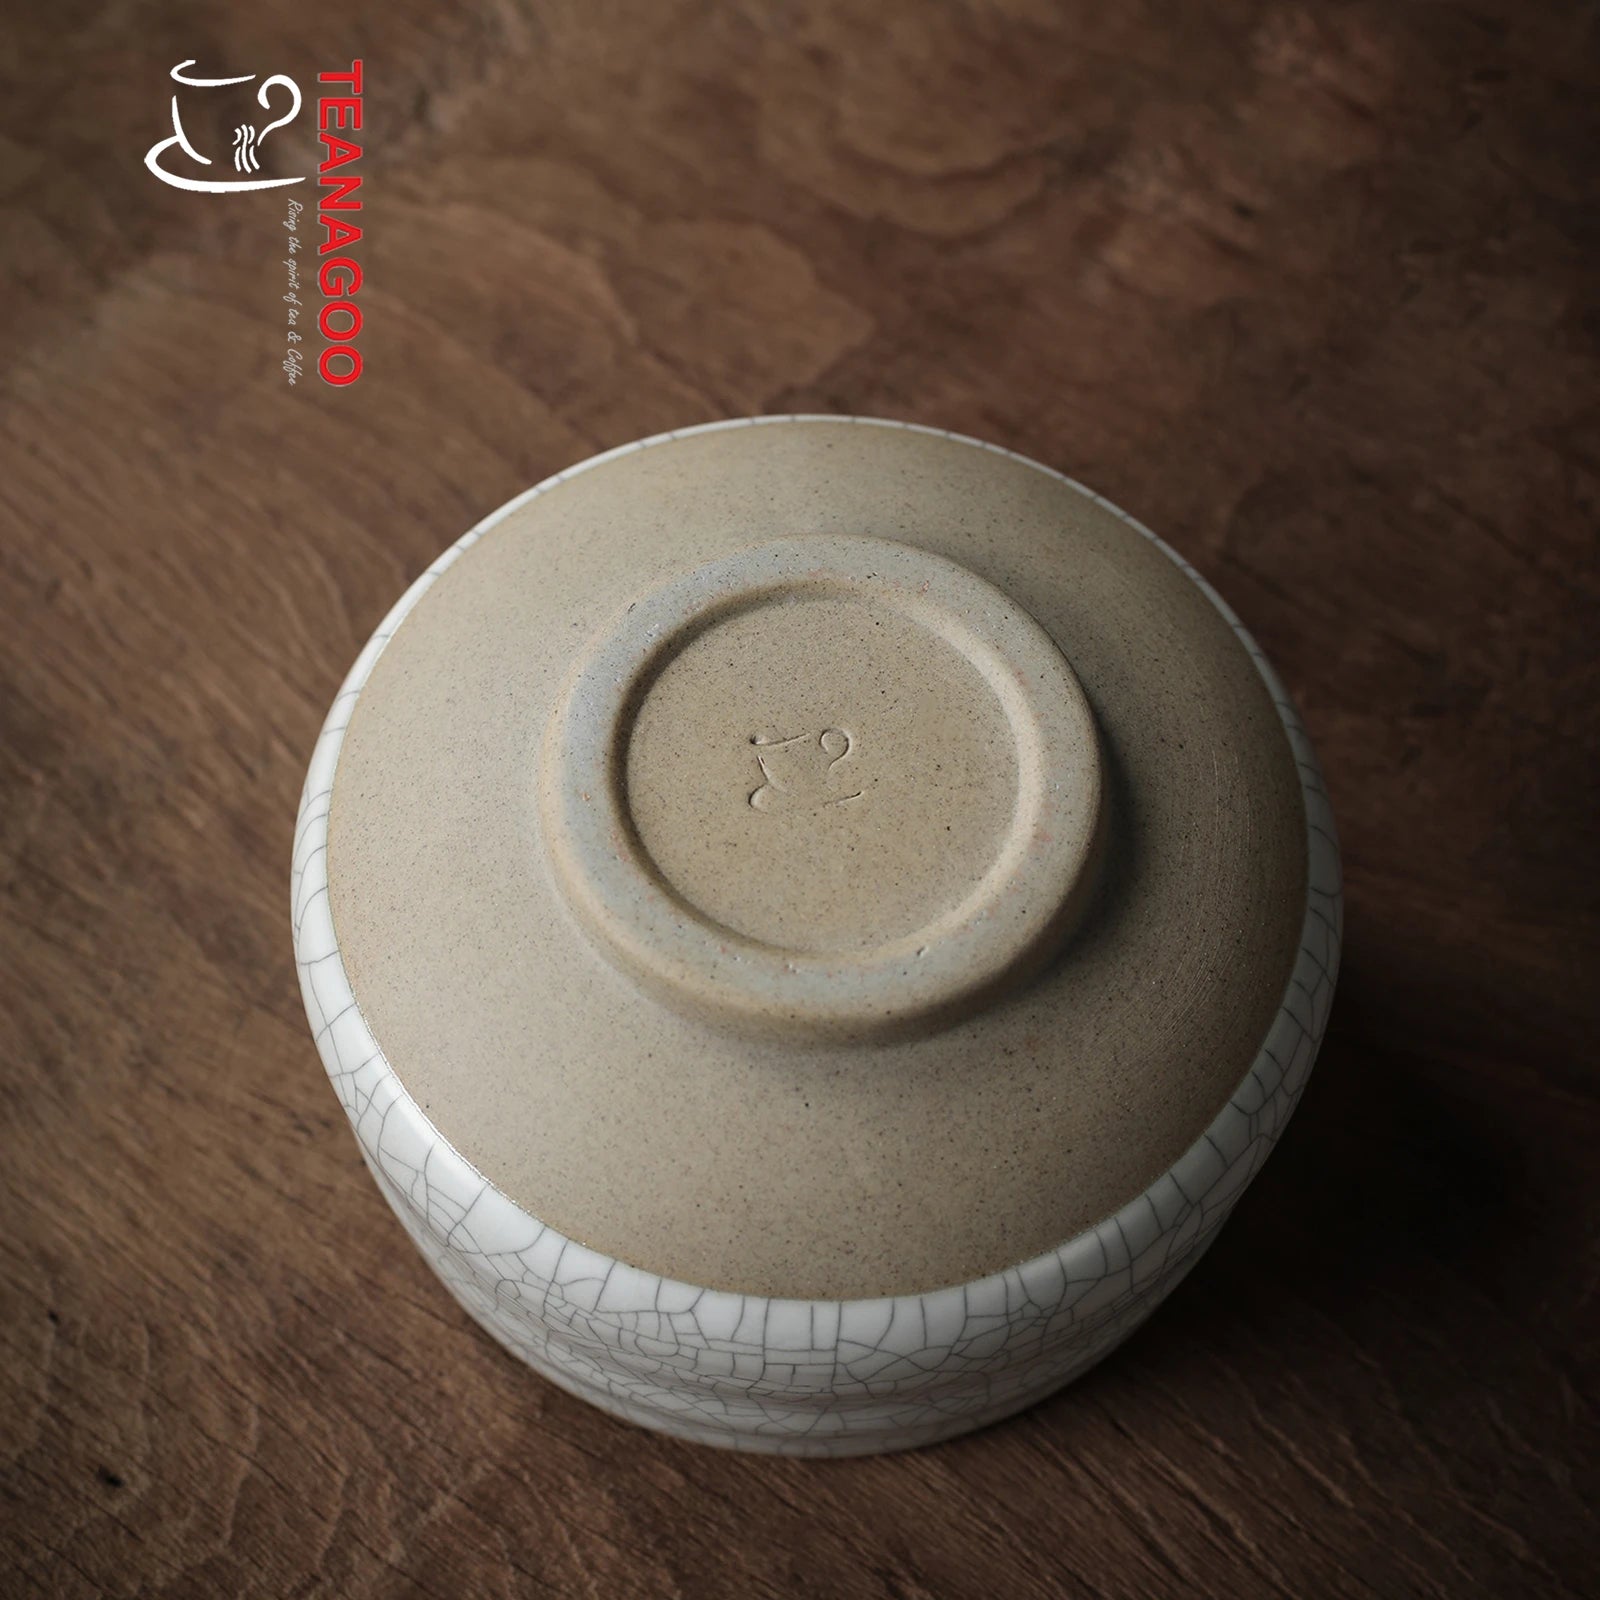 Japanese Ceramic Matcha Bowl with Whisk Holder, Pouring Spout Design, TG-K17